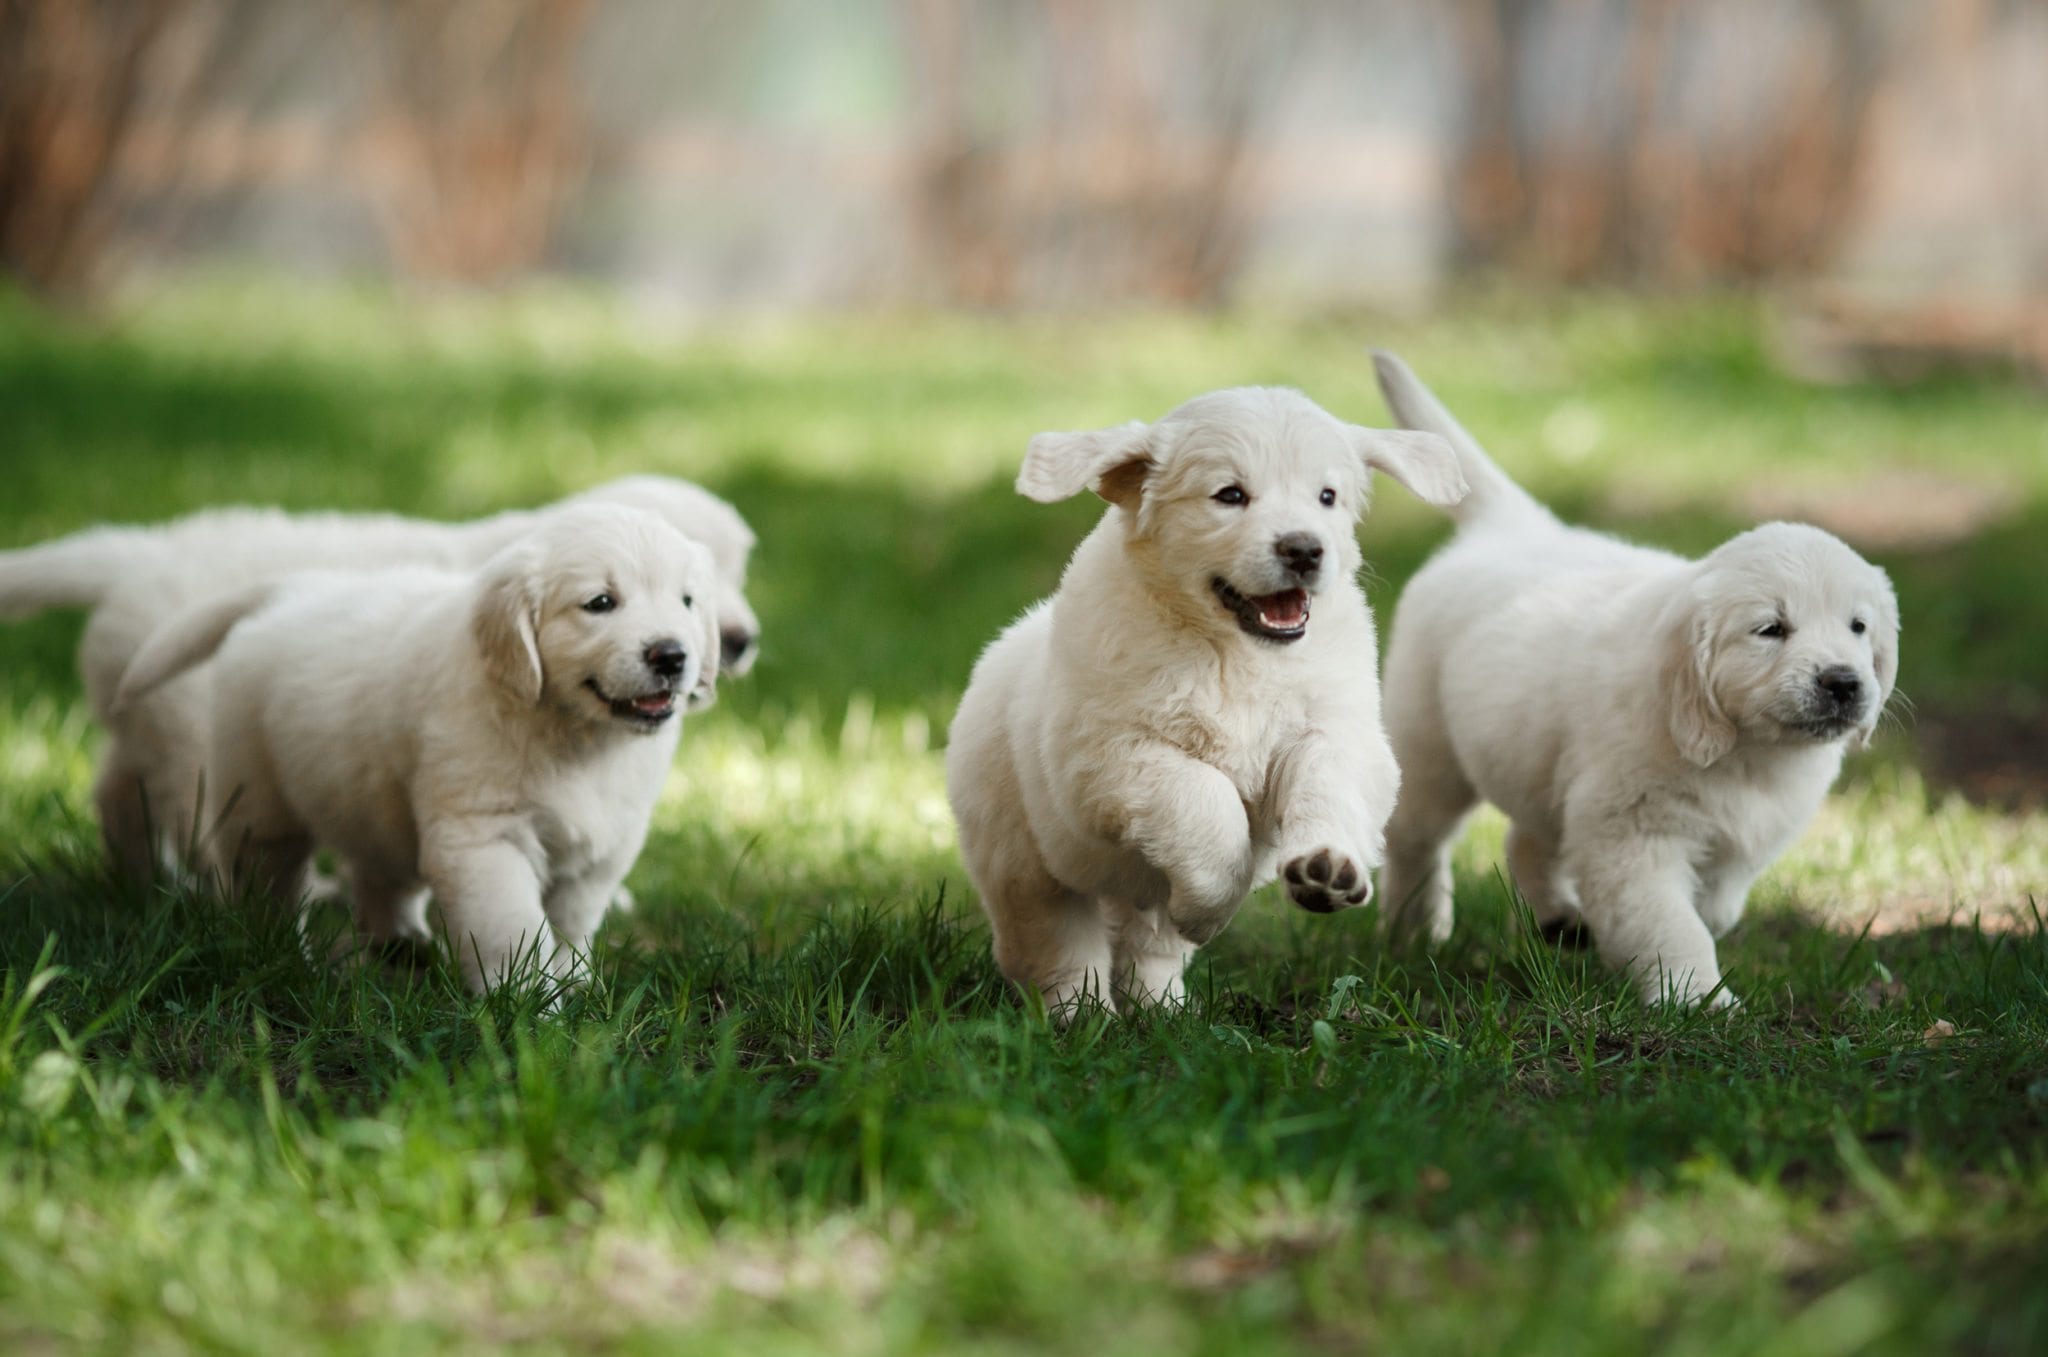 four white fluffy puppies running around in the grass